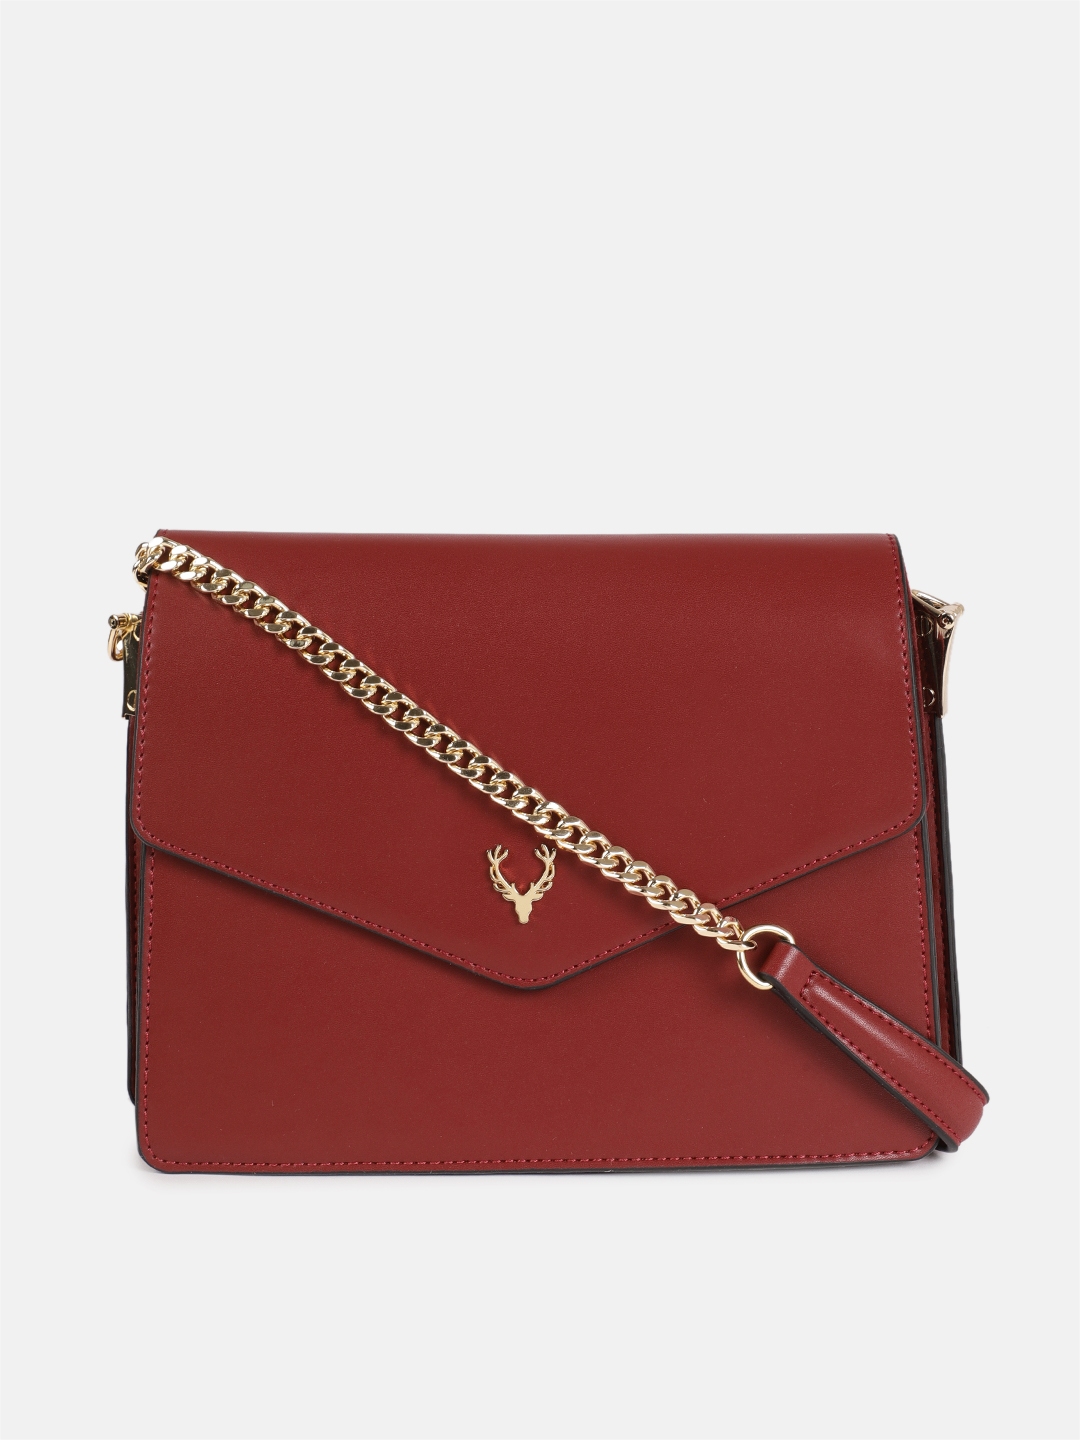 Buy Allen Solly Red Solid Sling Bag - Handbags for Women 13861700 | Myntra